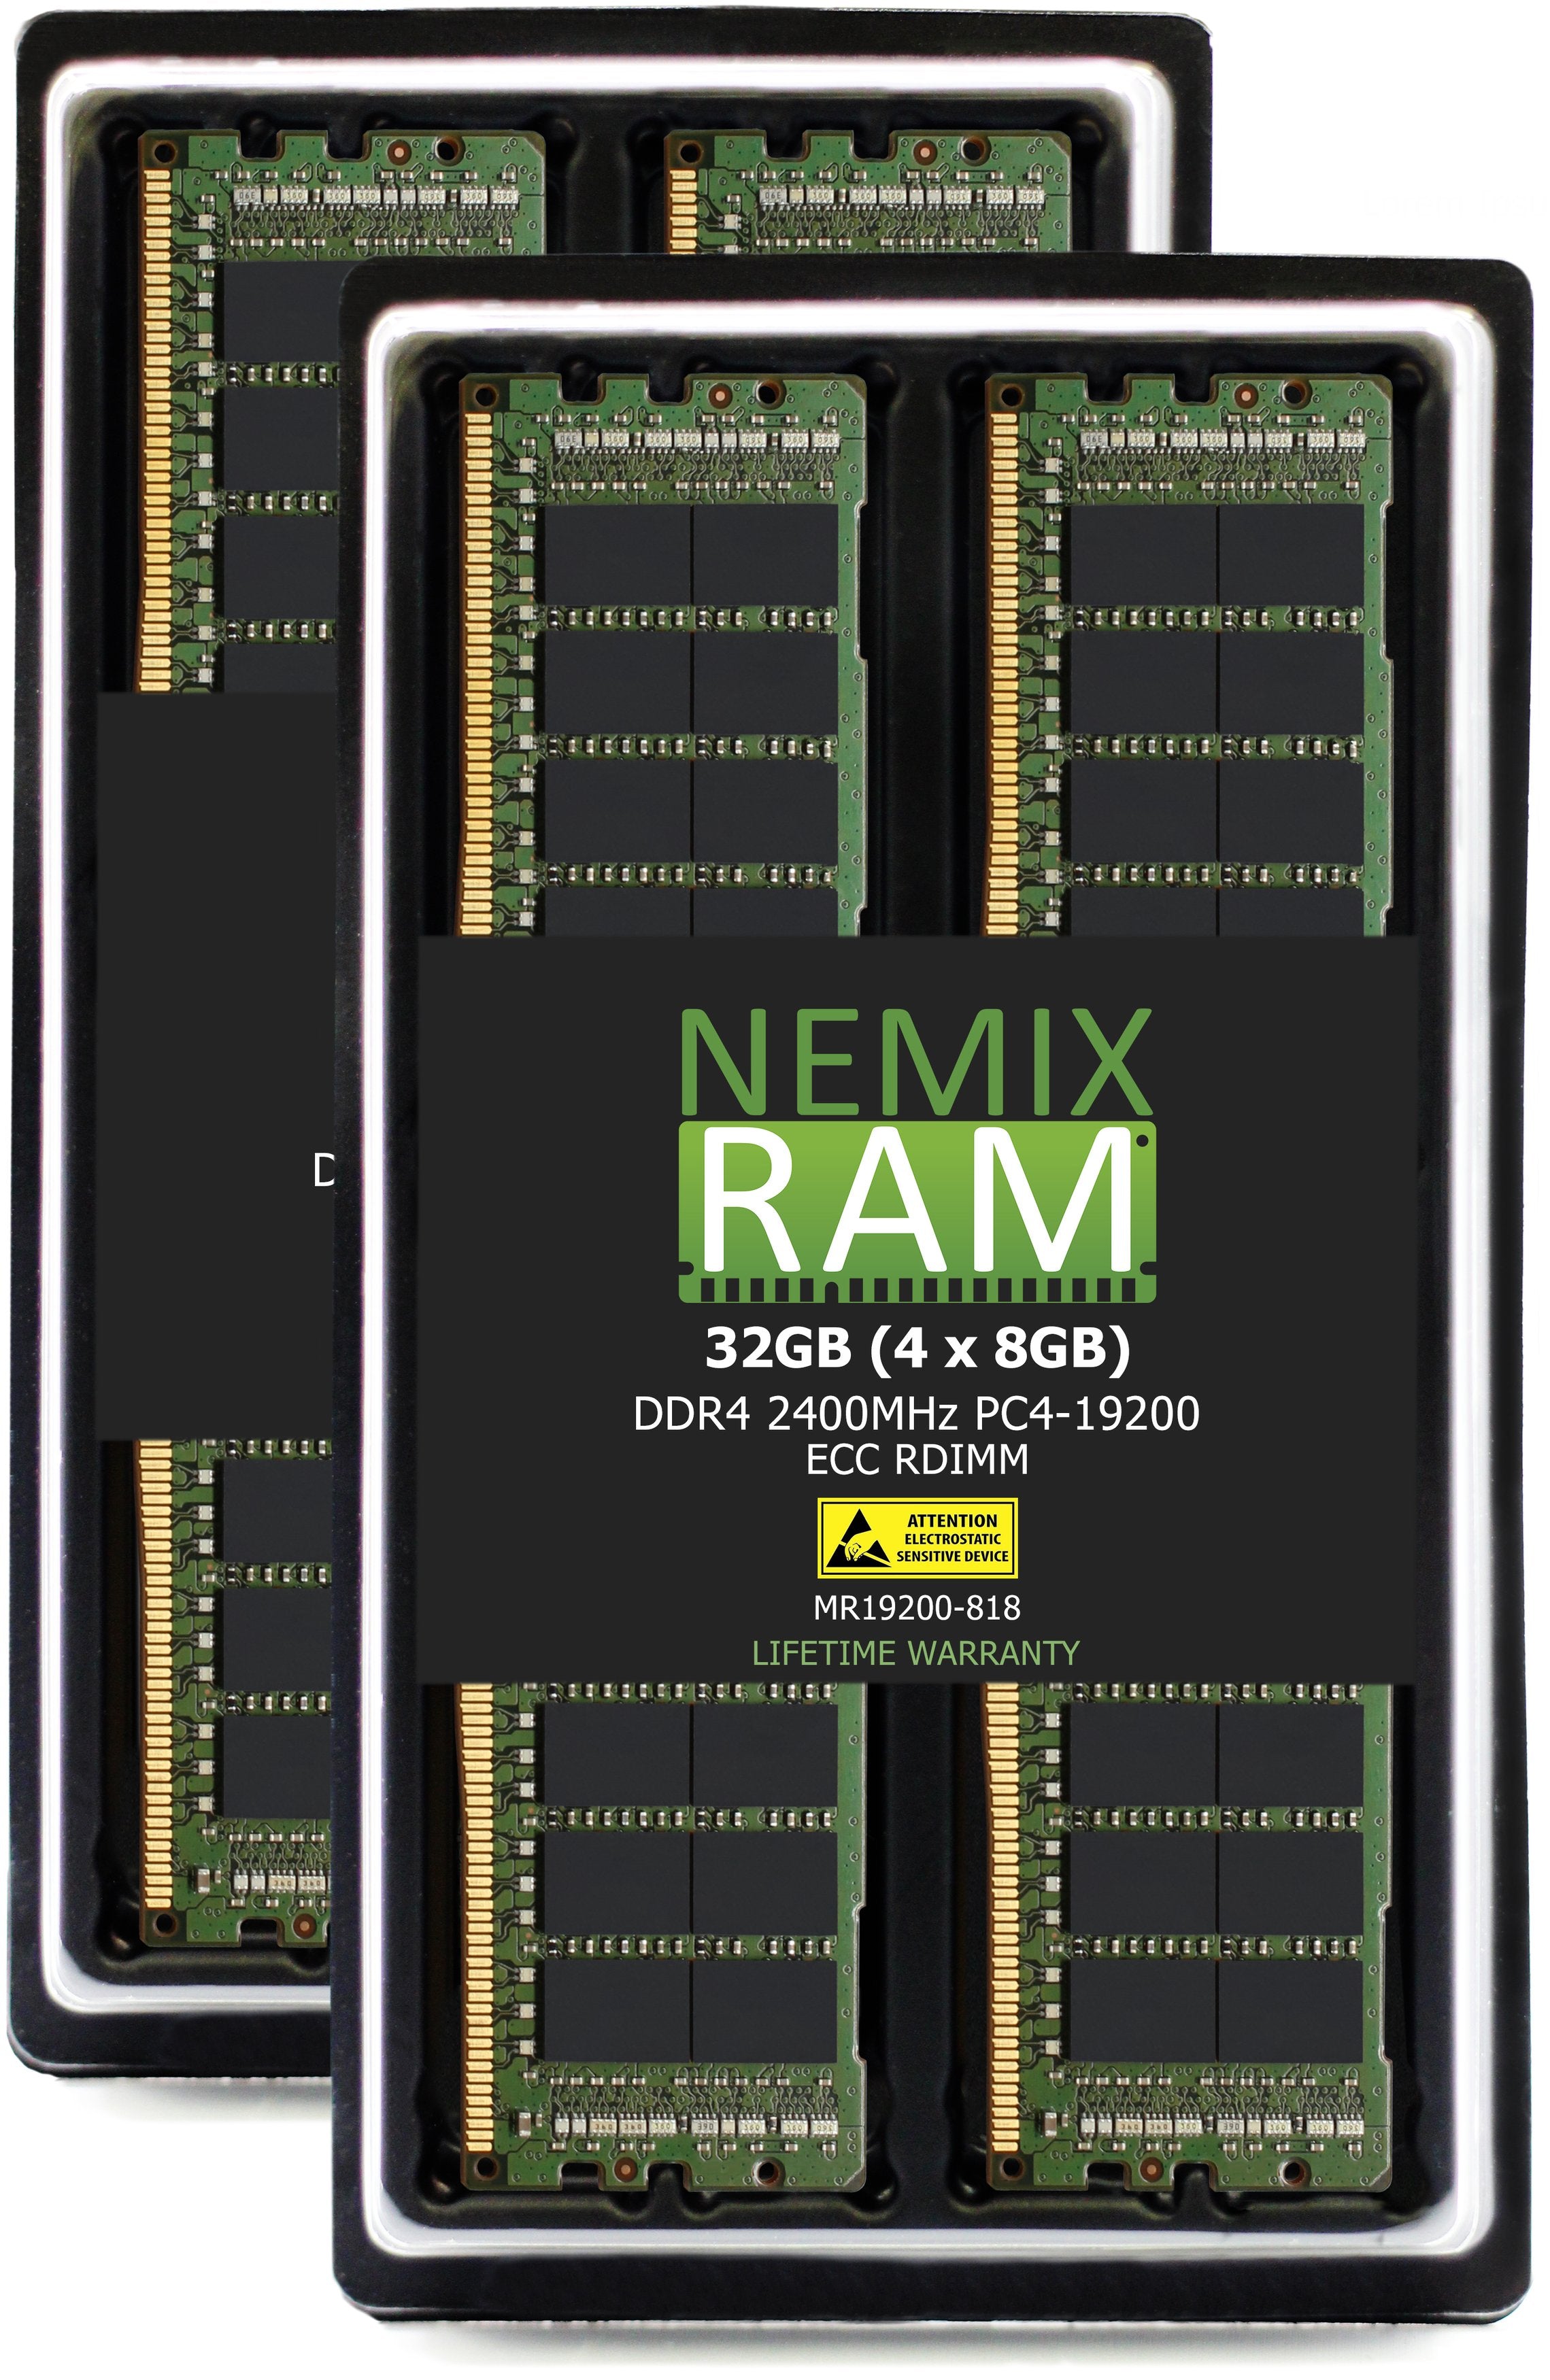 DDR4 2400MHZ PC4-19200 RDIMM 1RX8